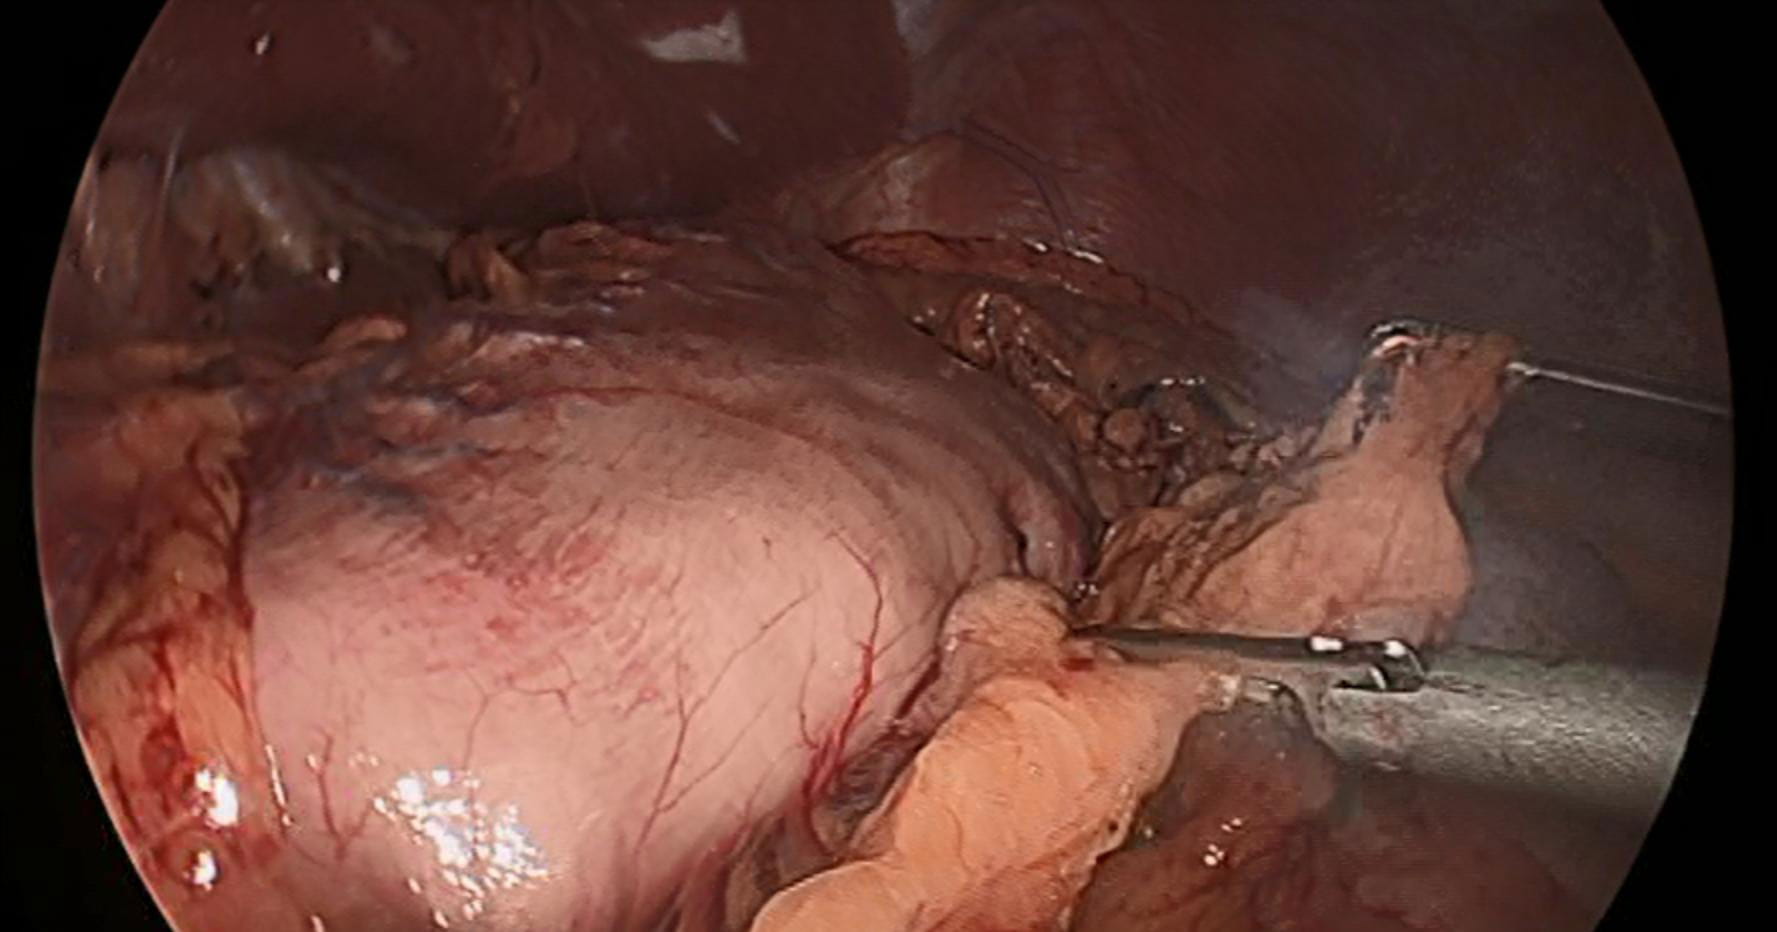 Laparoscopic view of the stomach